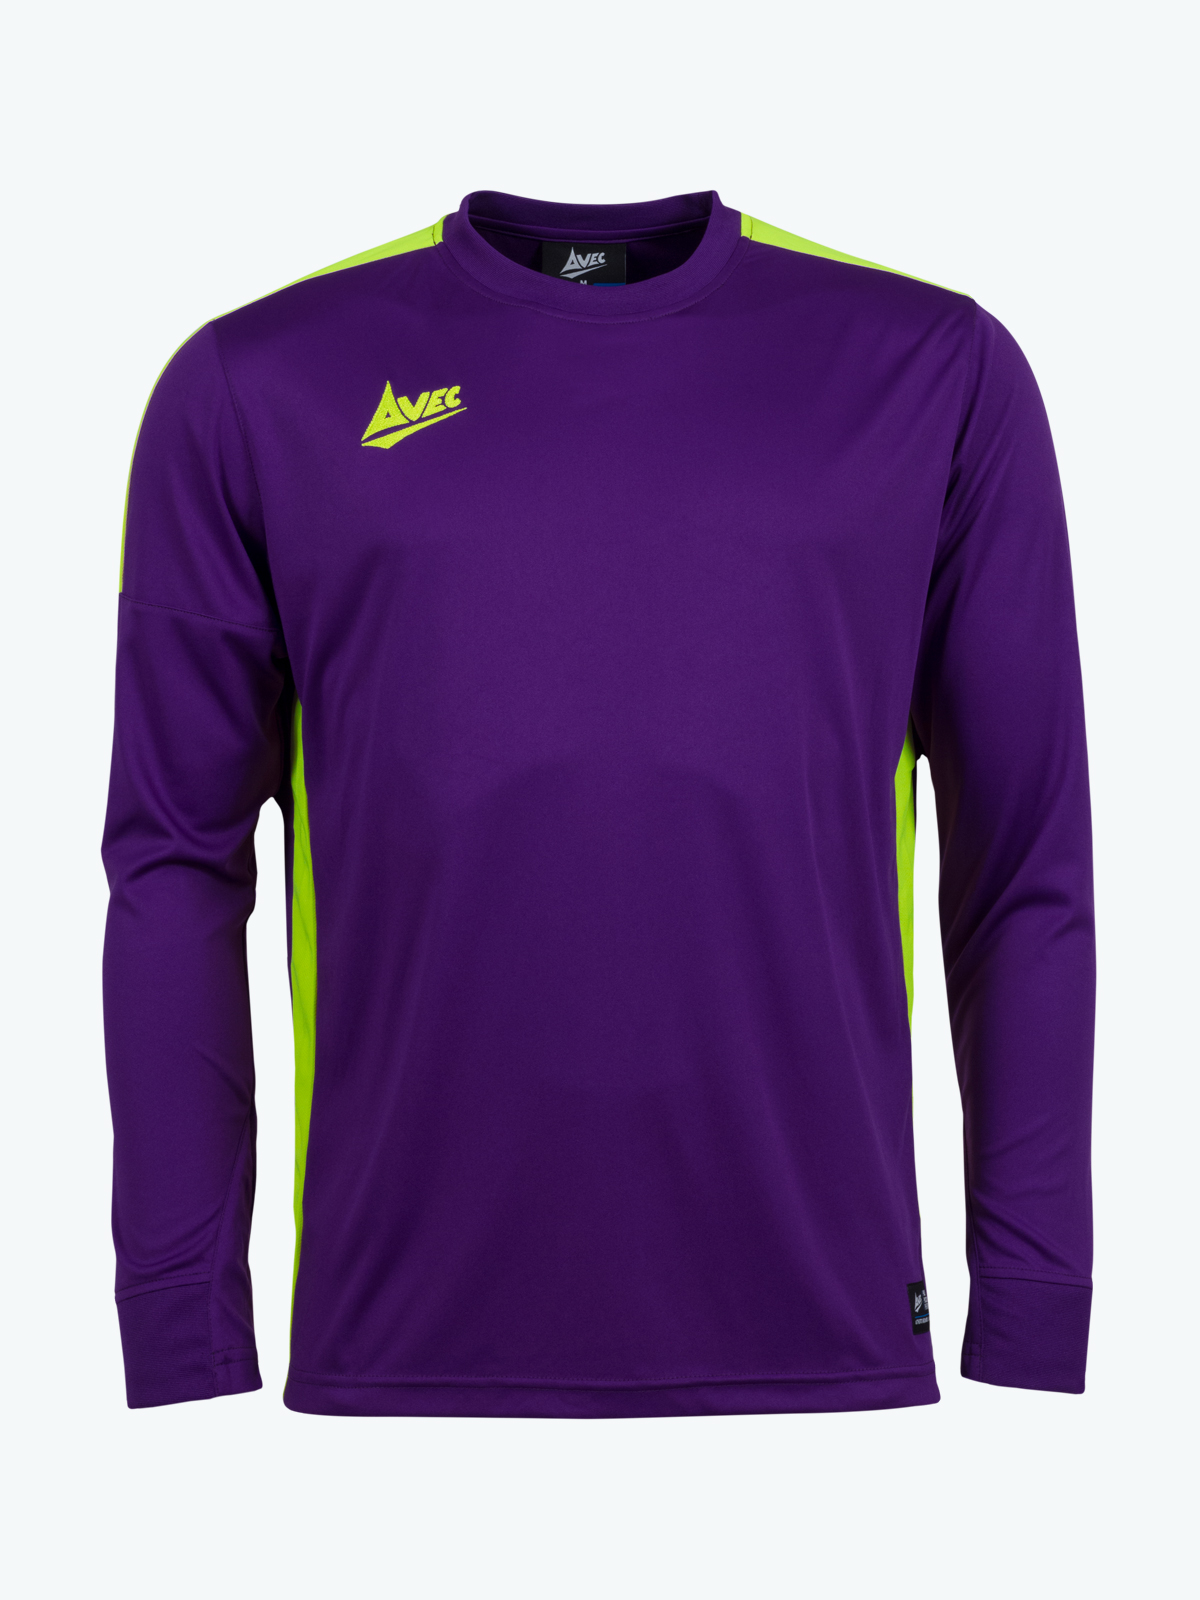 football black purple jersey